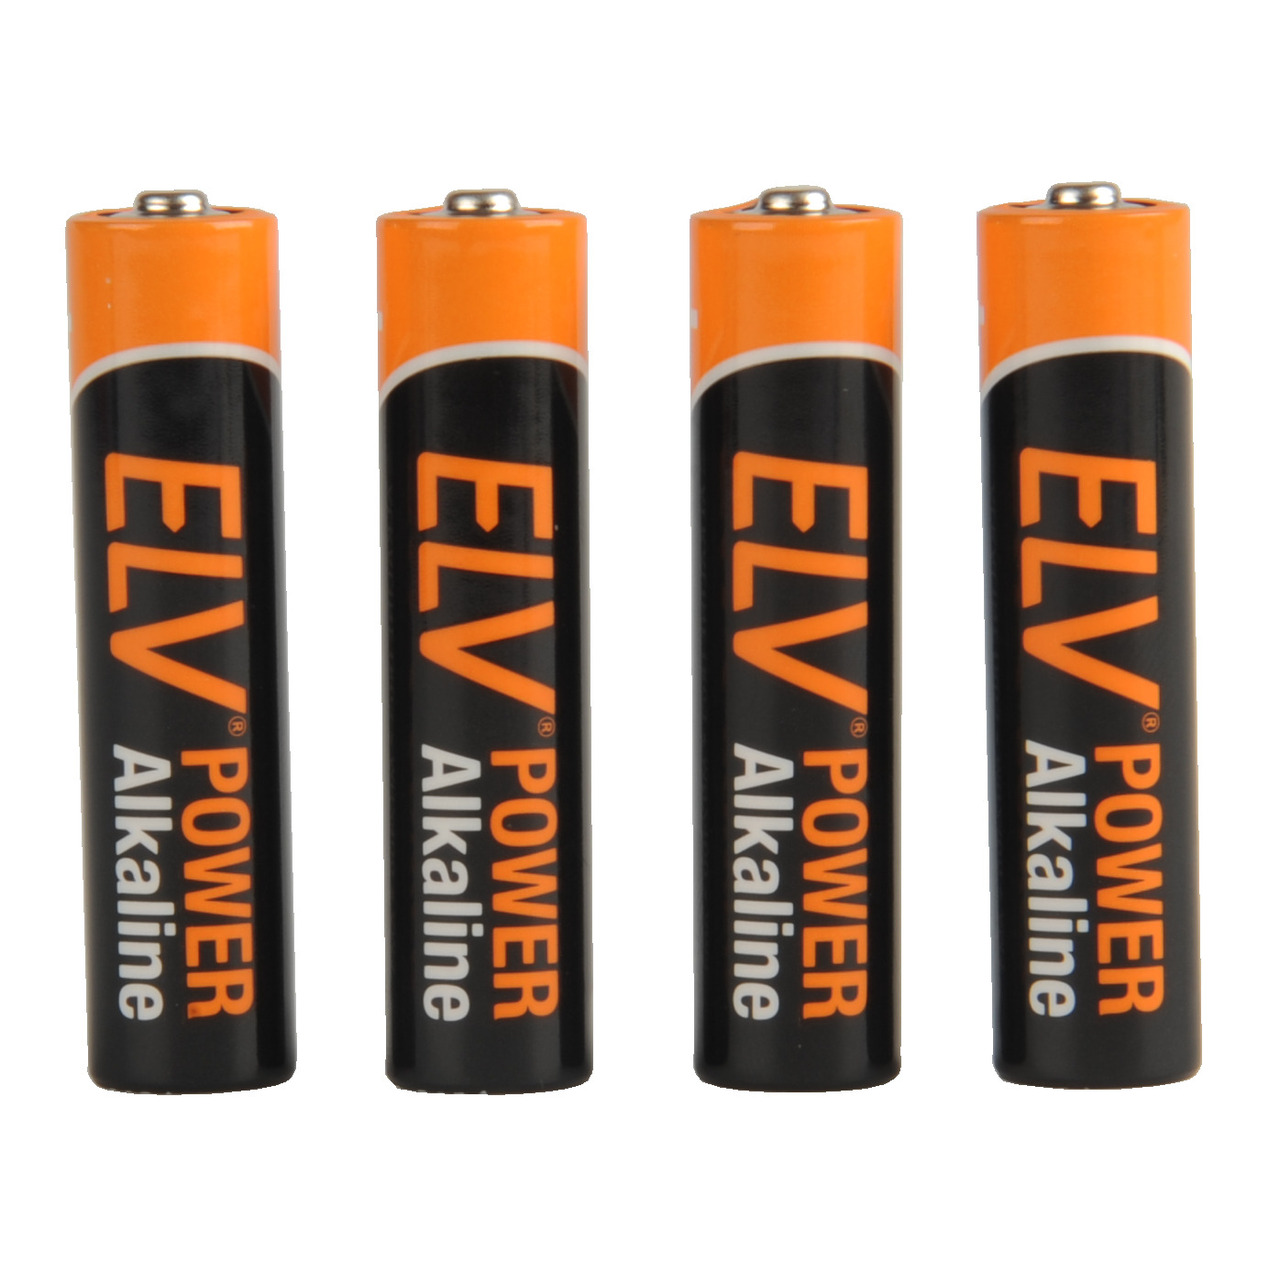 ELV POWER Alkaline Batterie Micro AAA- 4er Pack unter Stromversorgung